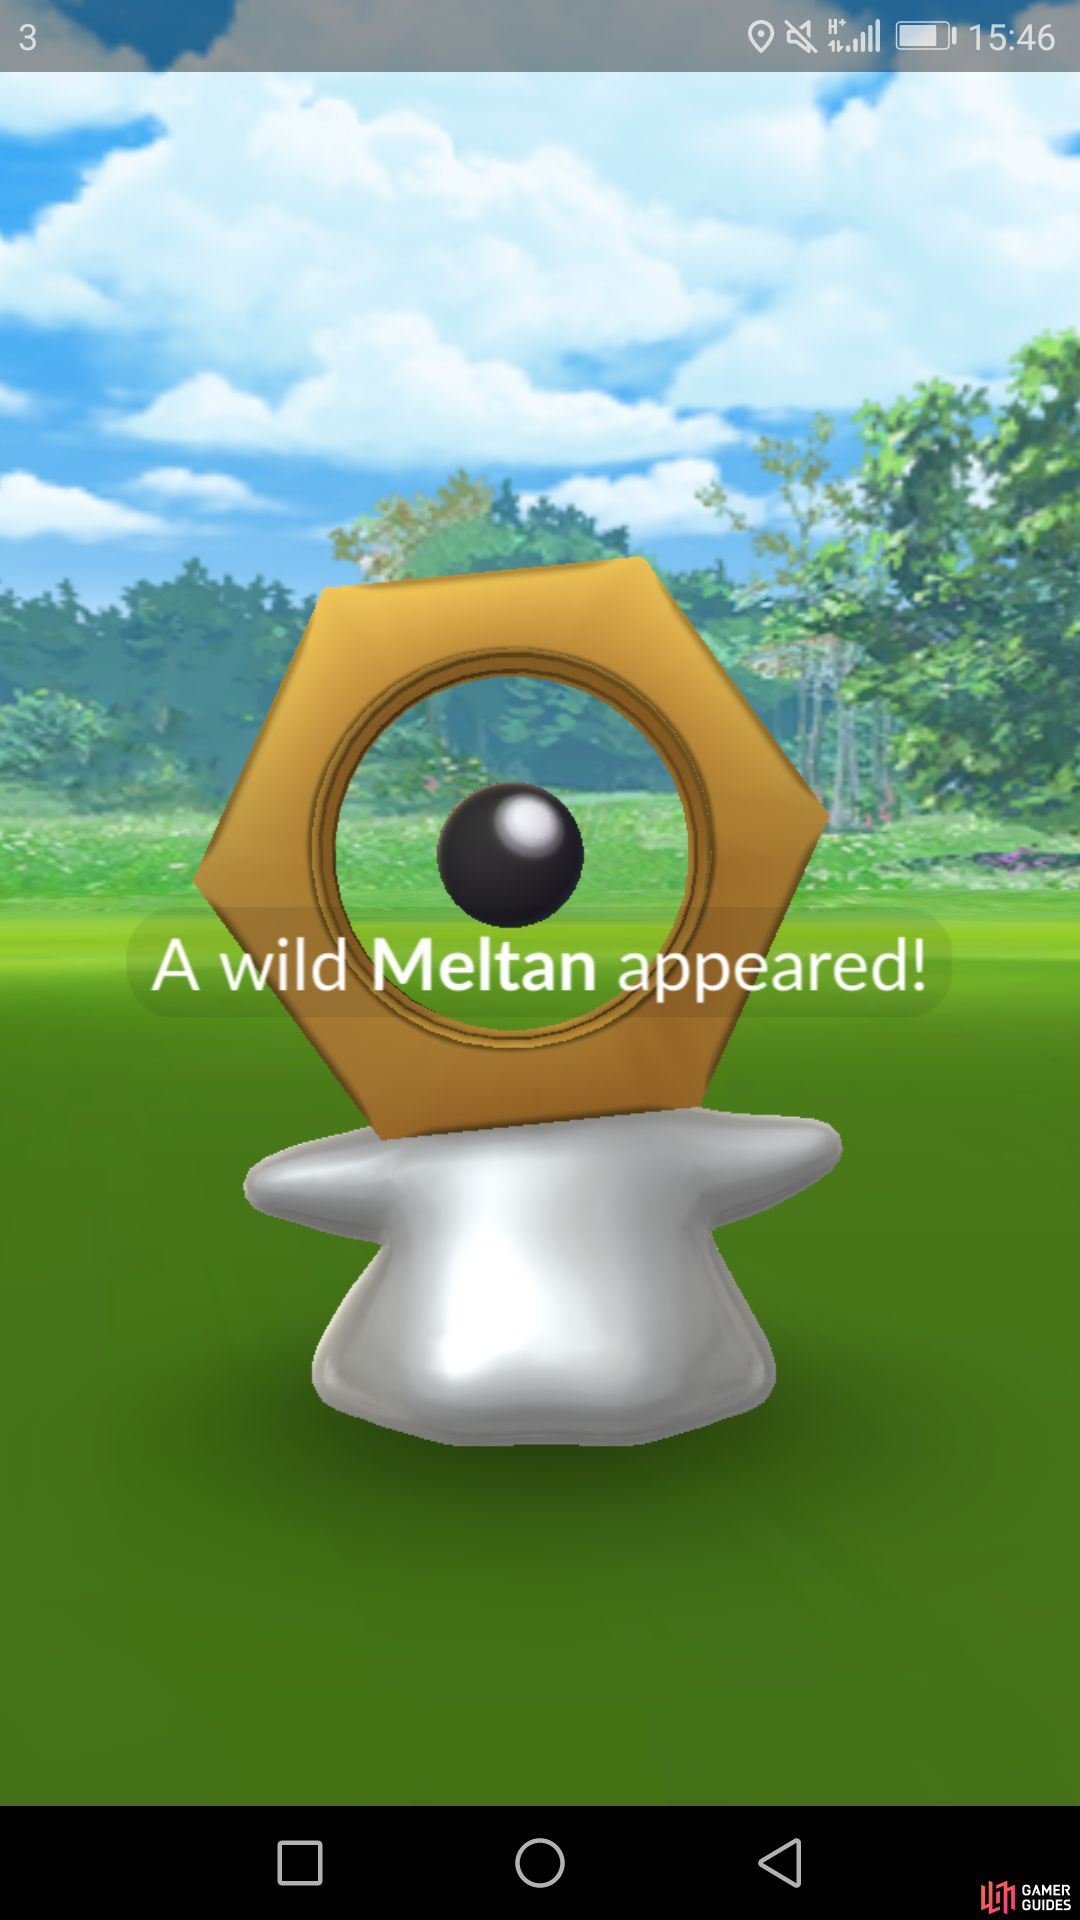 Mystery meltan Box for Pokemon Go. 